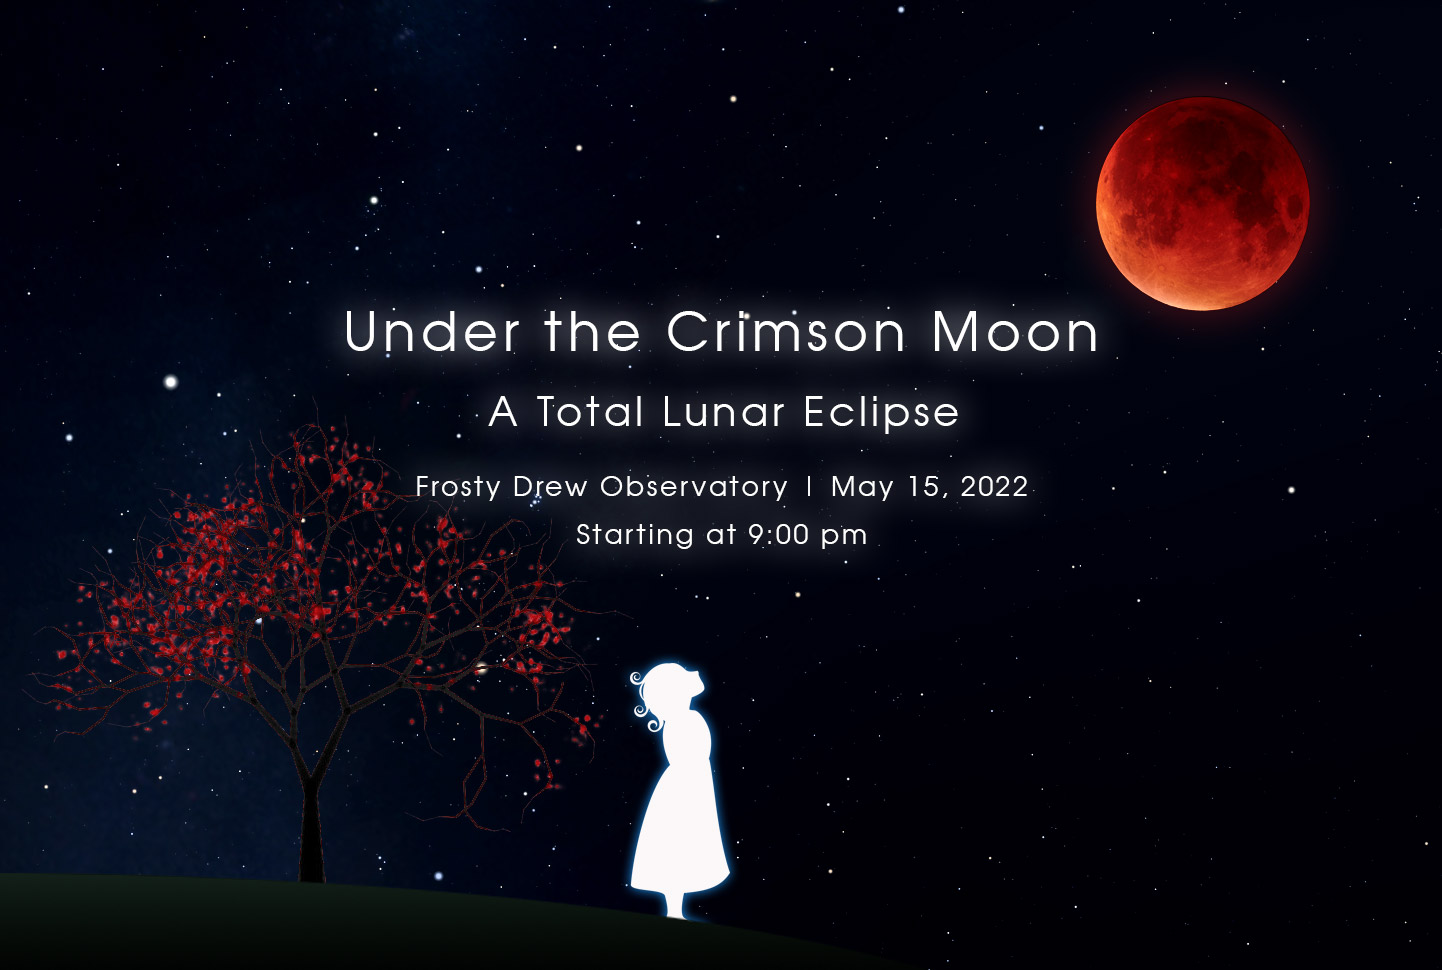 Under the Crimson Moon